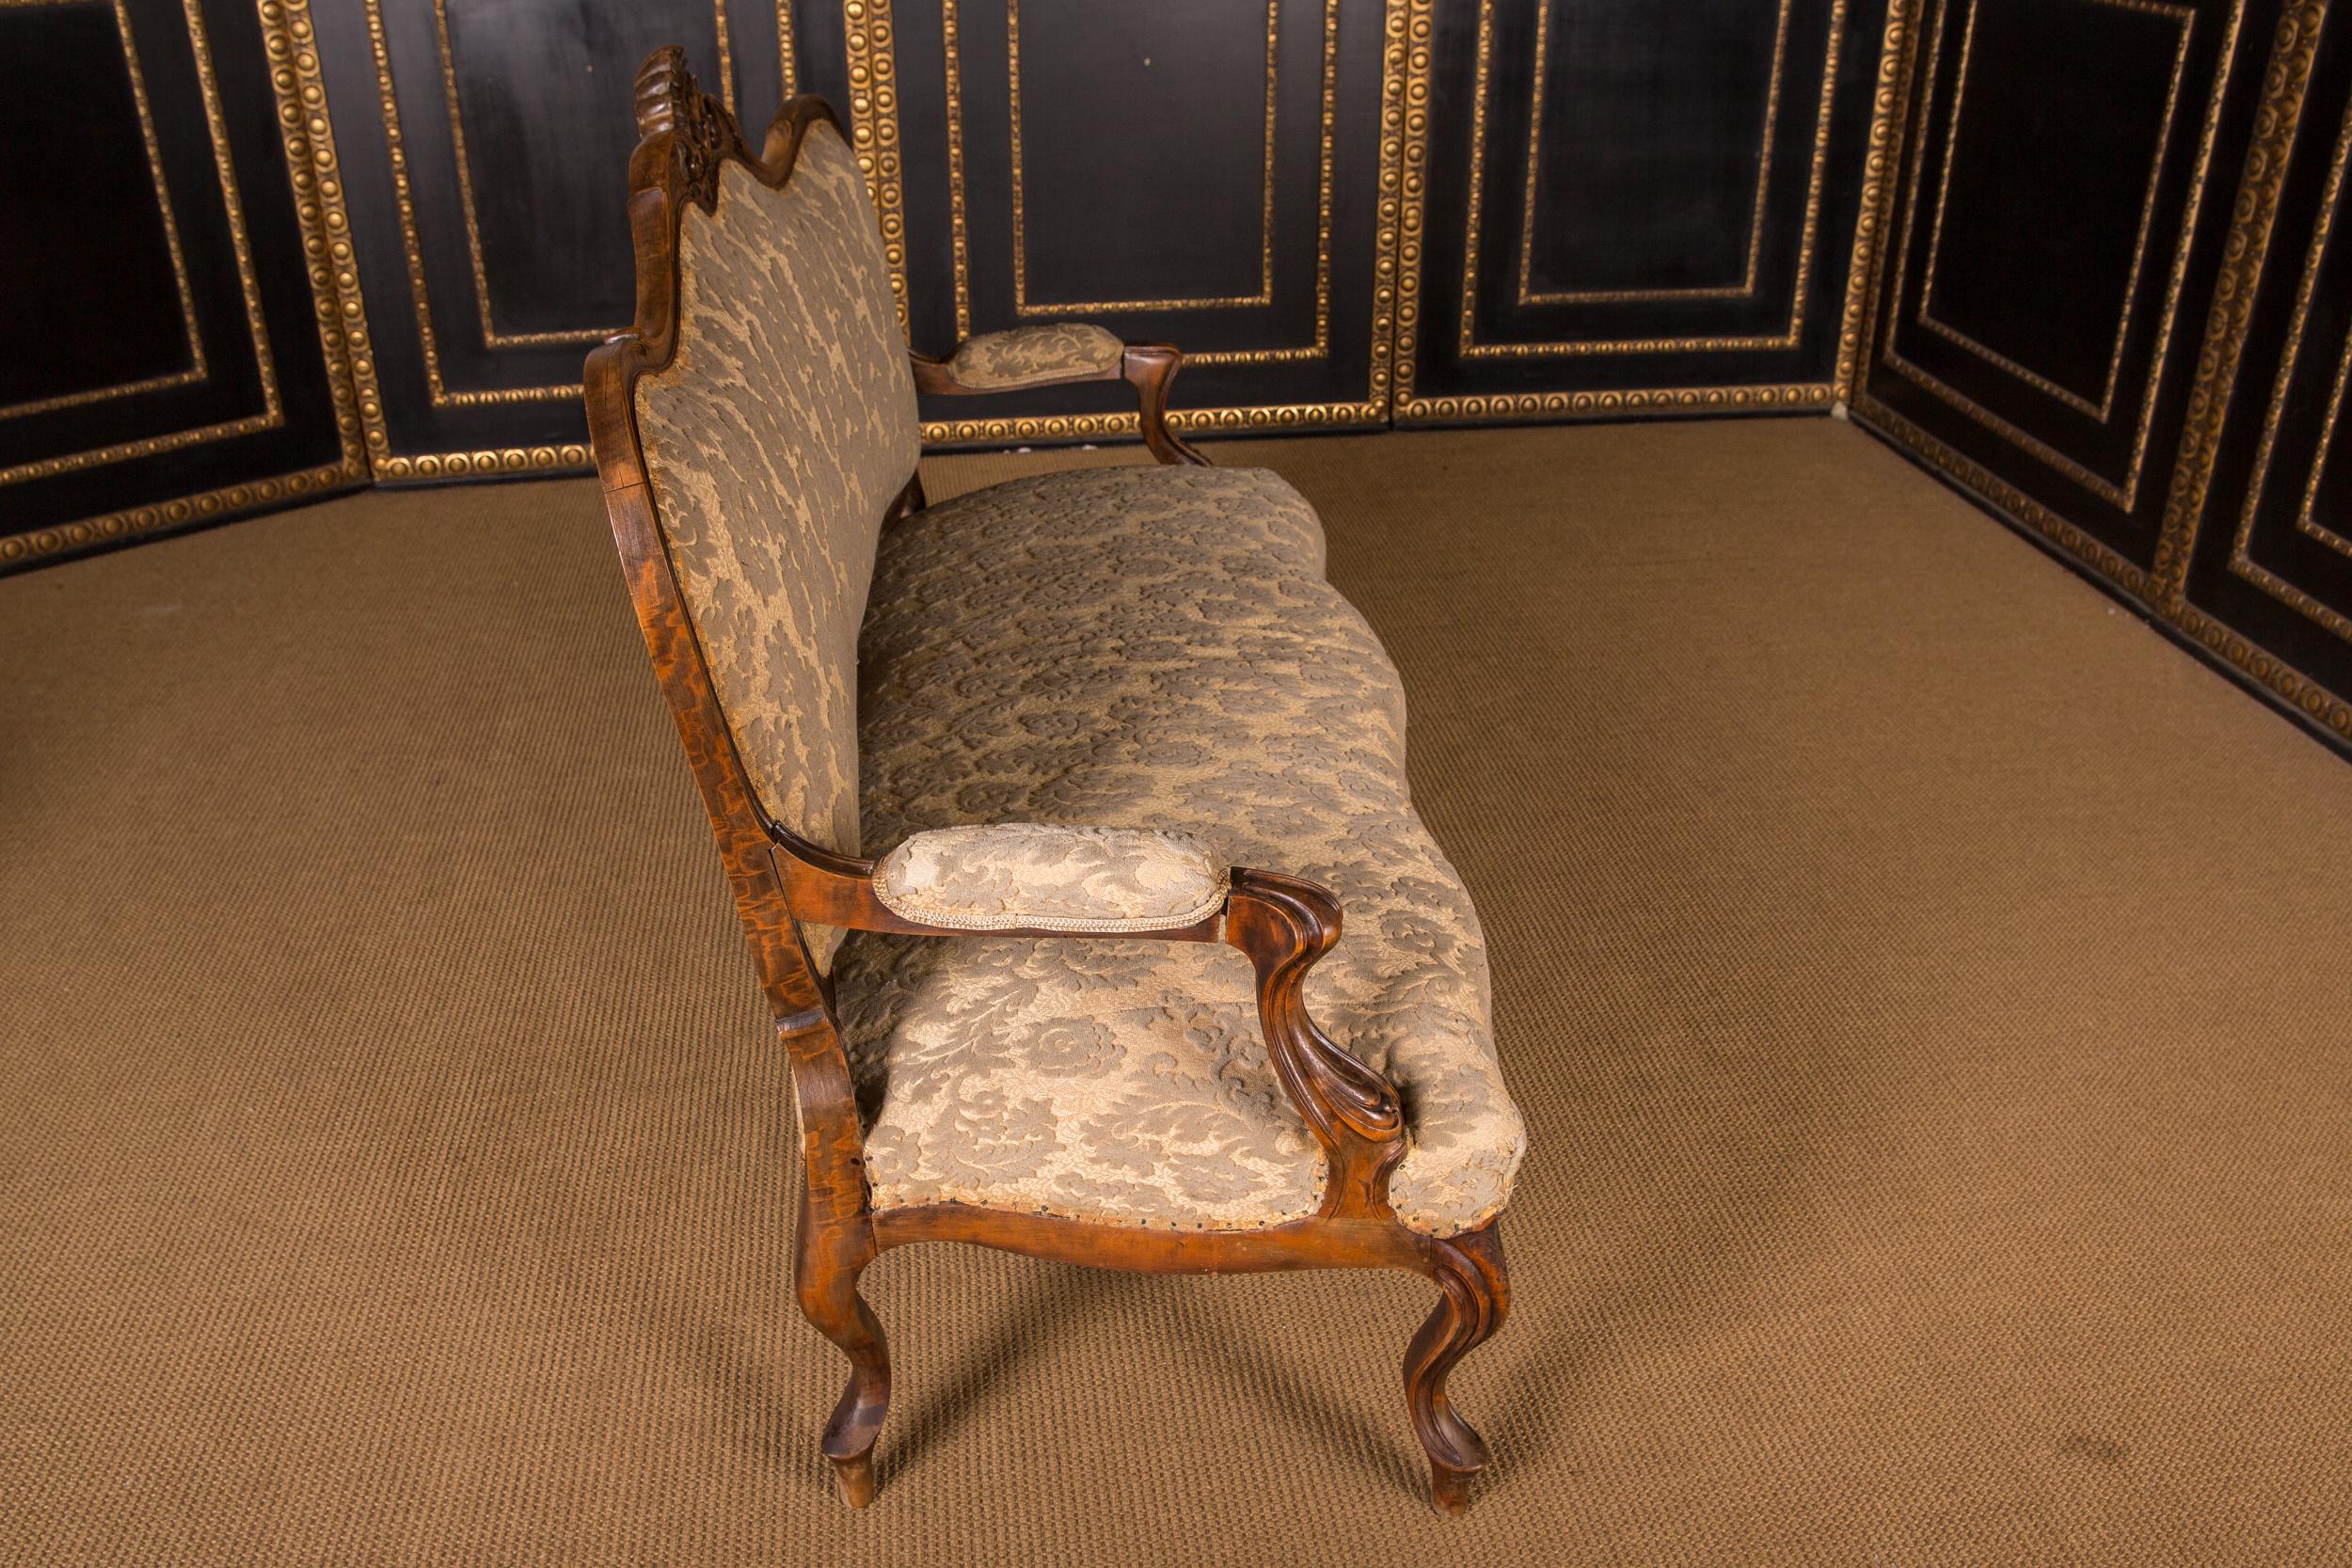 Castle Worthy Salon Group Sofa and Chairs Neo Rococo, circa 1860 9